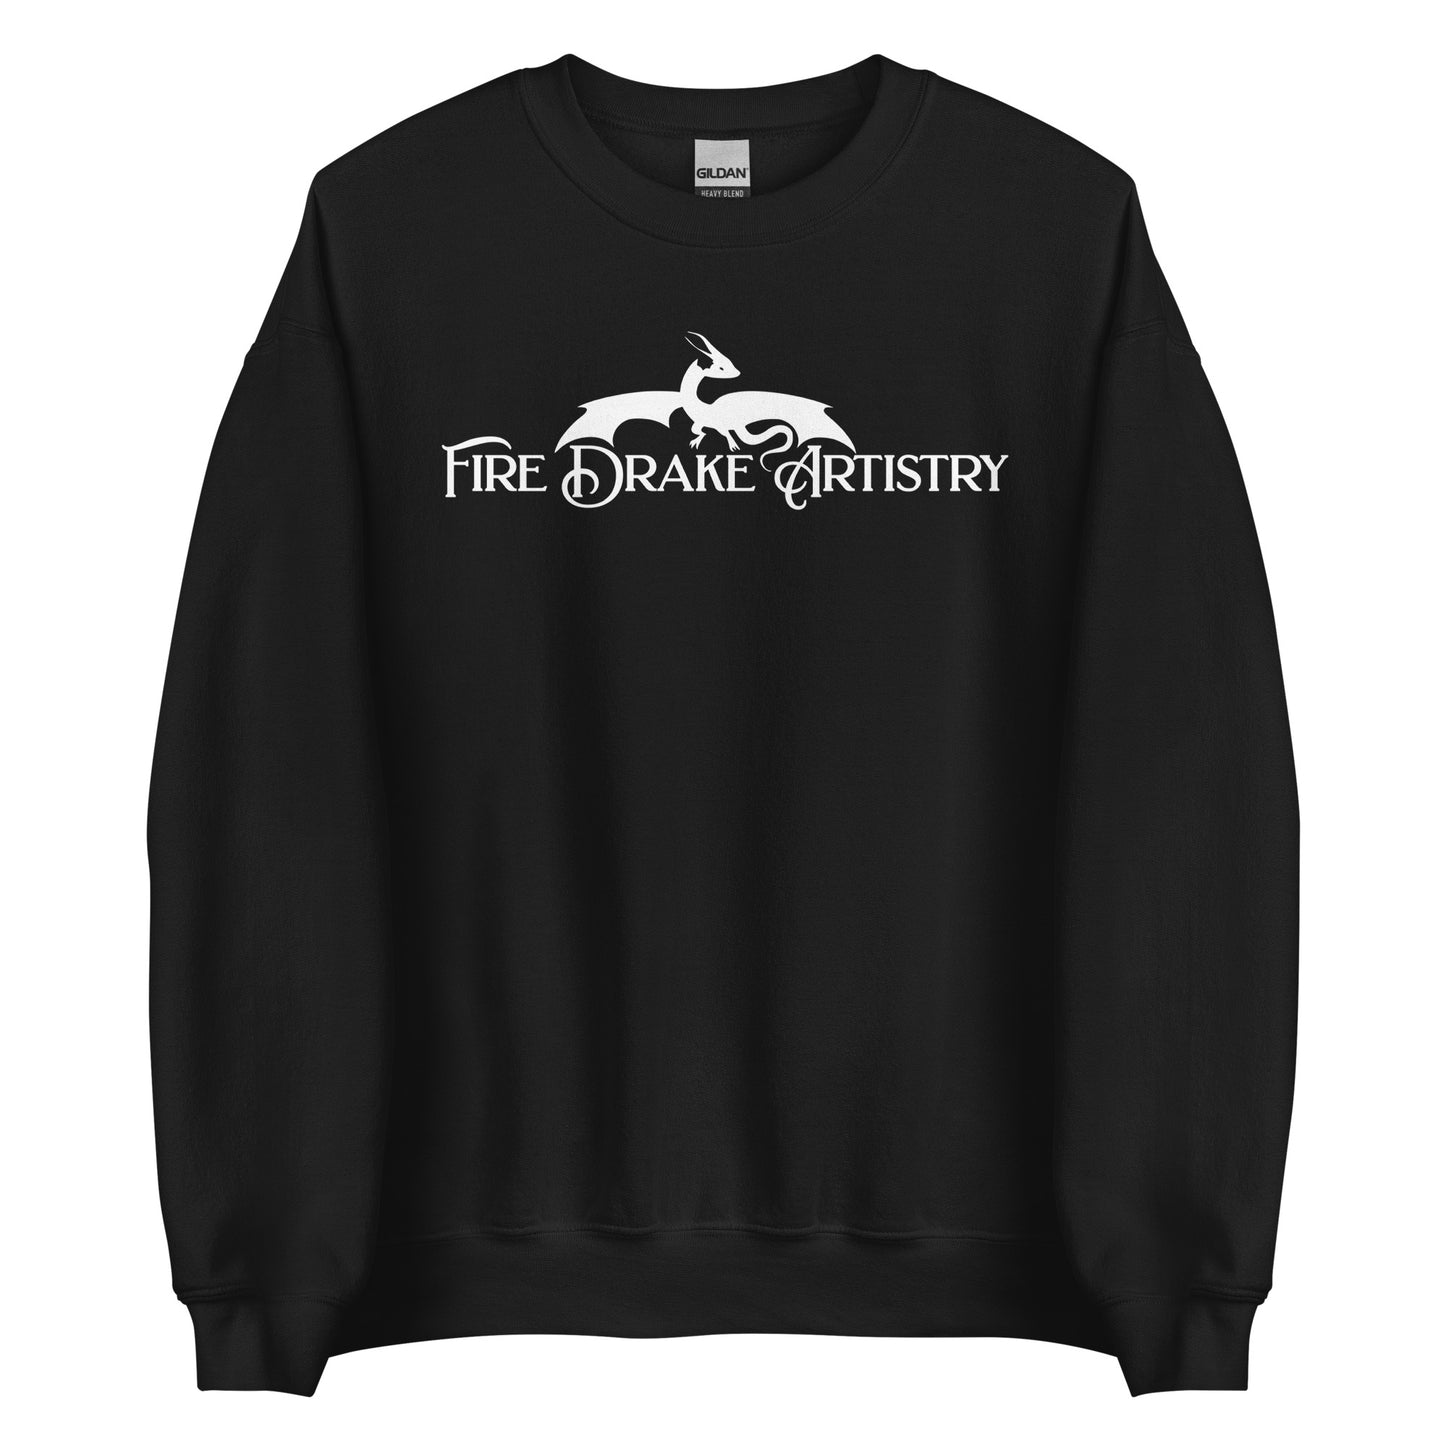 First Drake Artistry Logo Unisex Hoodie Sweatshirt Merch™ for FireDrake Artistry